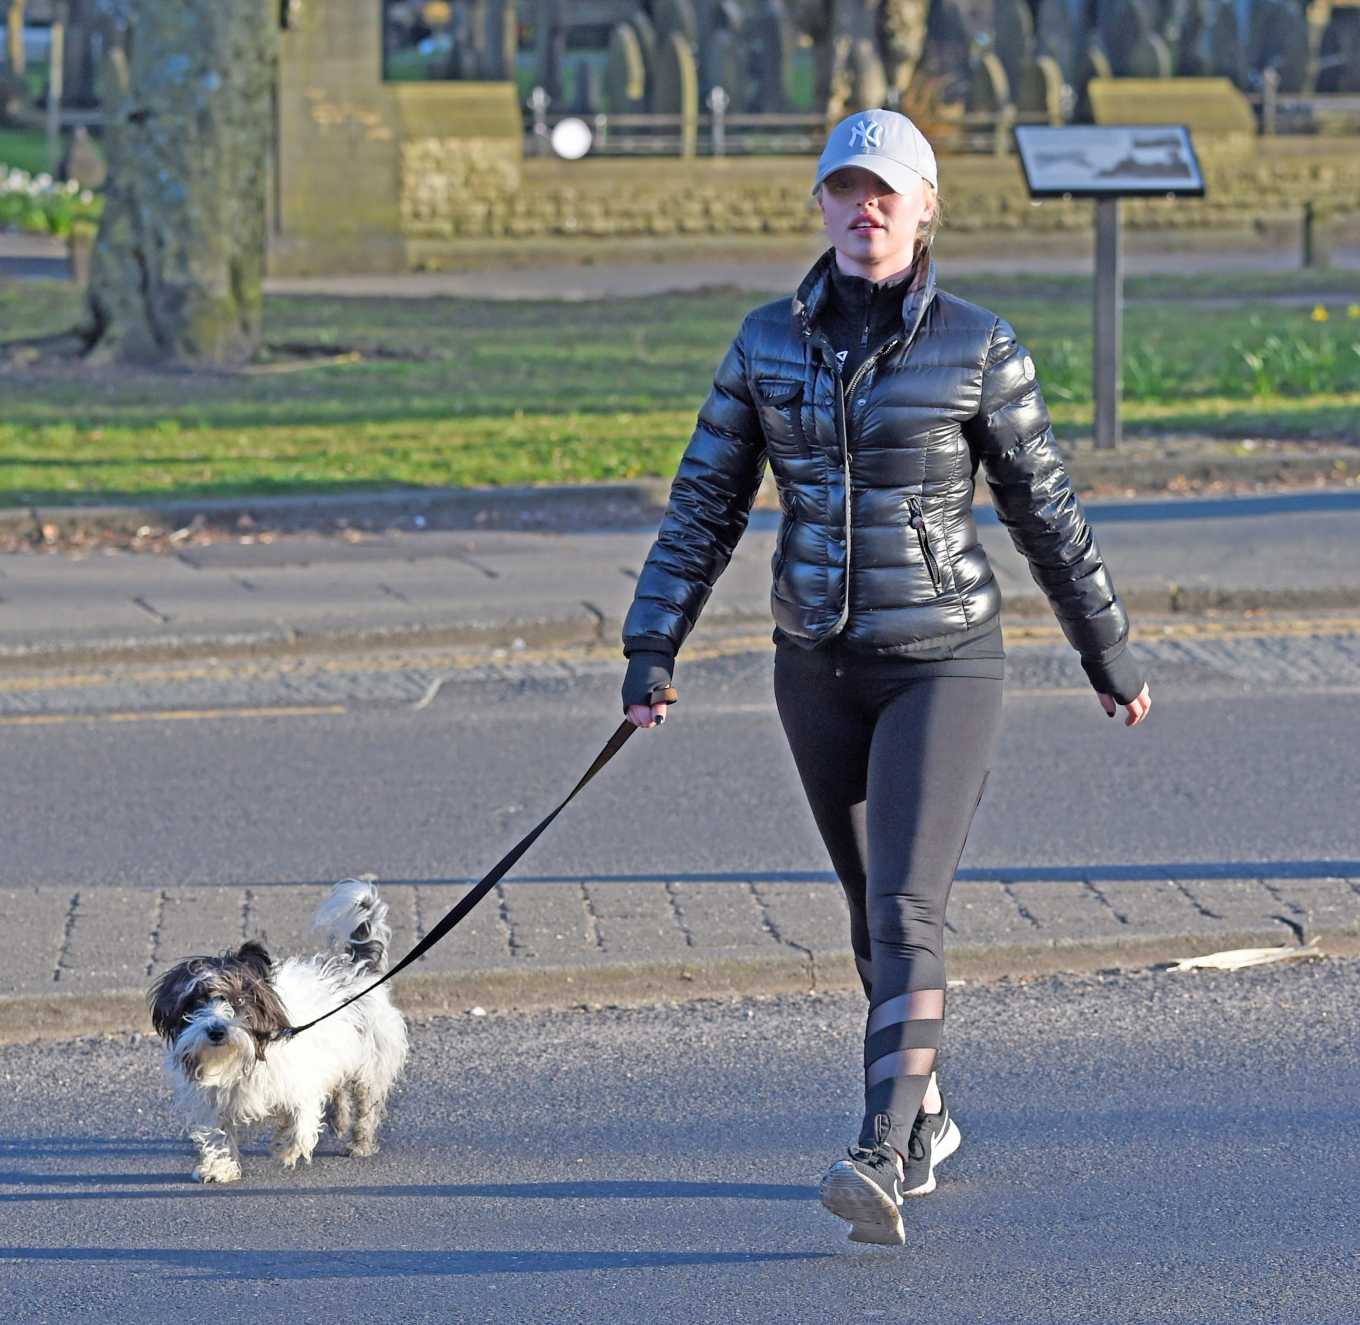 Jorgie Porter â€“ Jog with her dog in Manchester